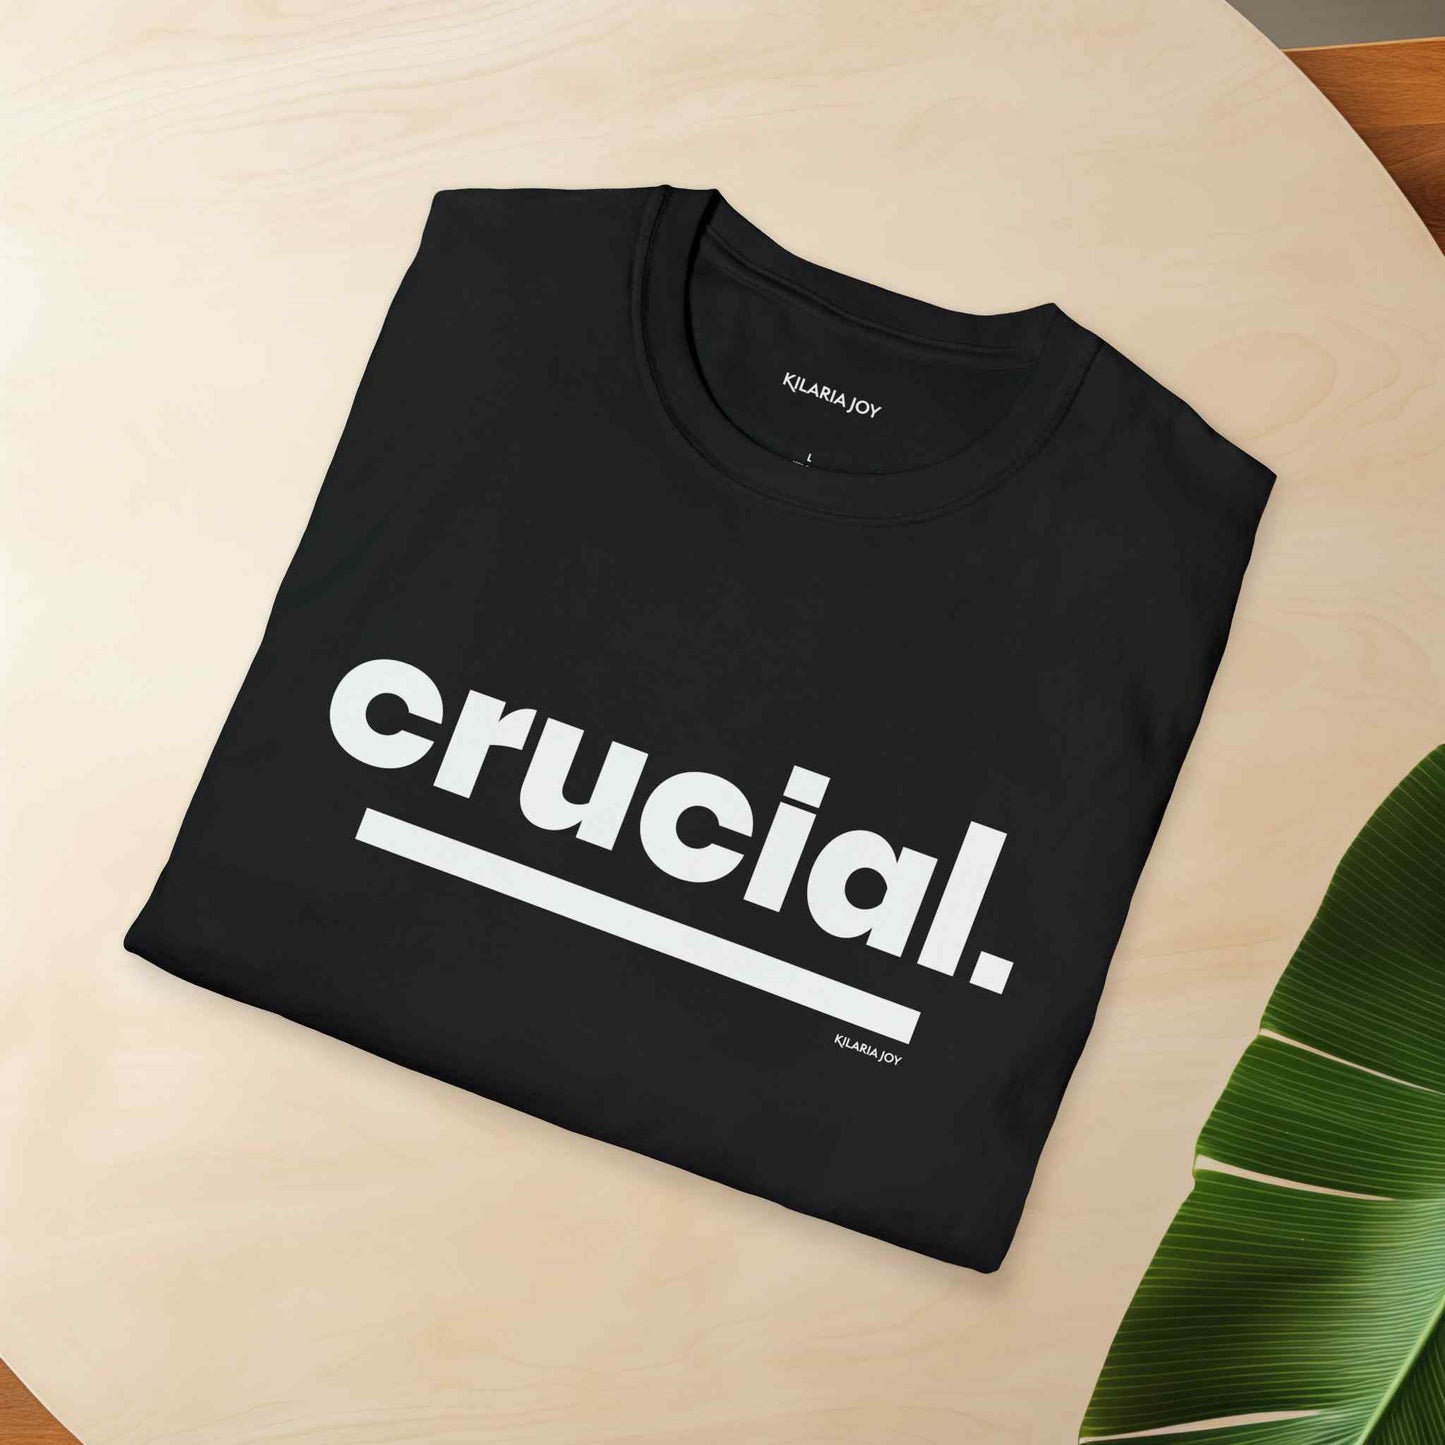 Crucial Women's Classic Modern Fit T-Shirt